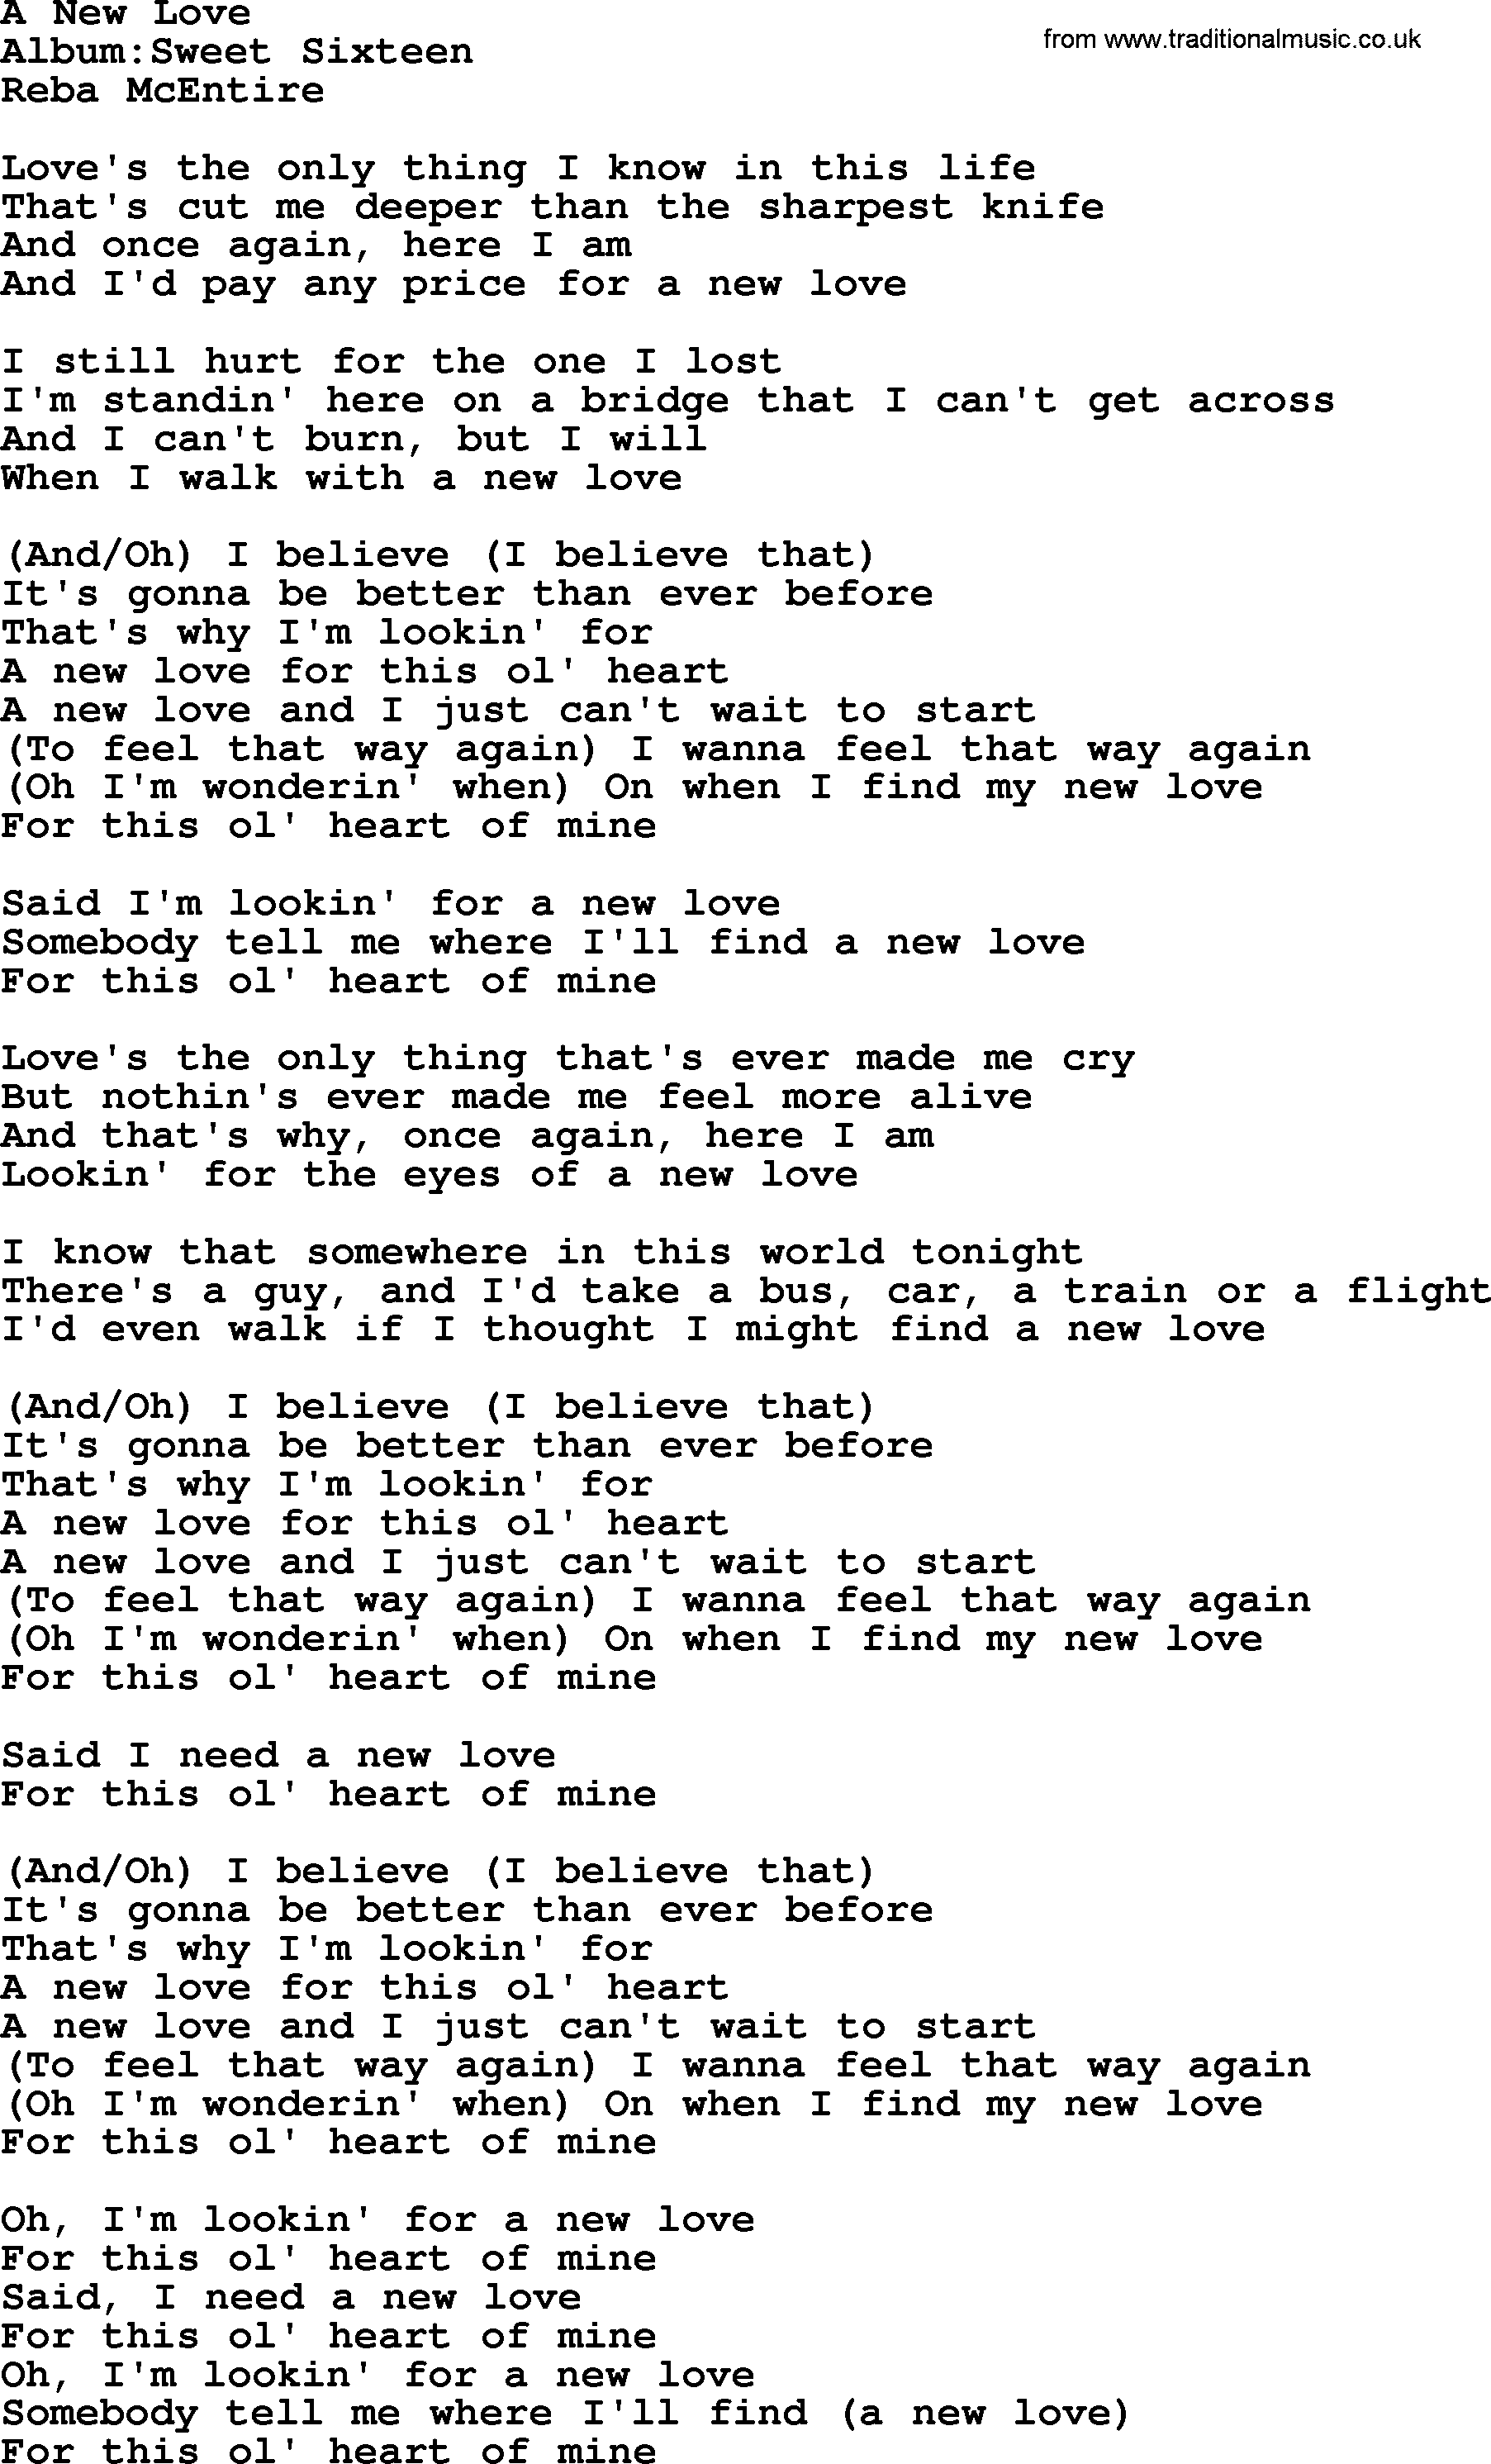 Reba McEntire song: A New Love lyrics